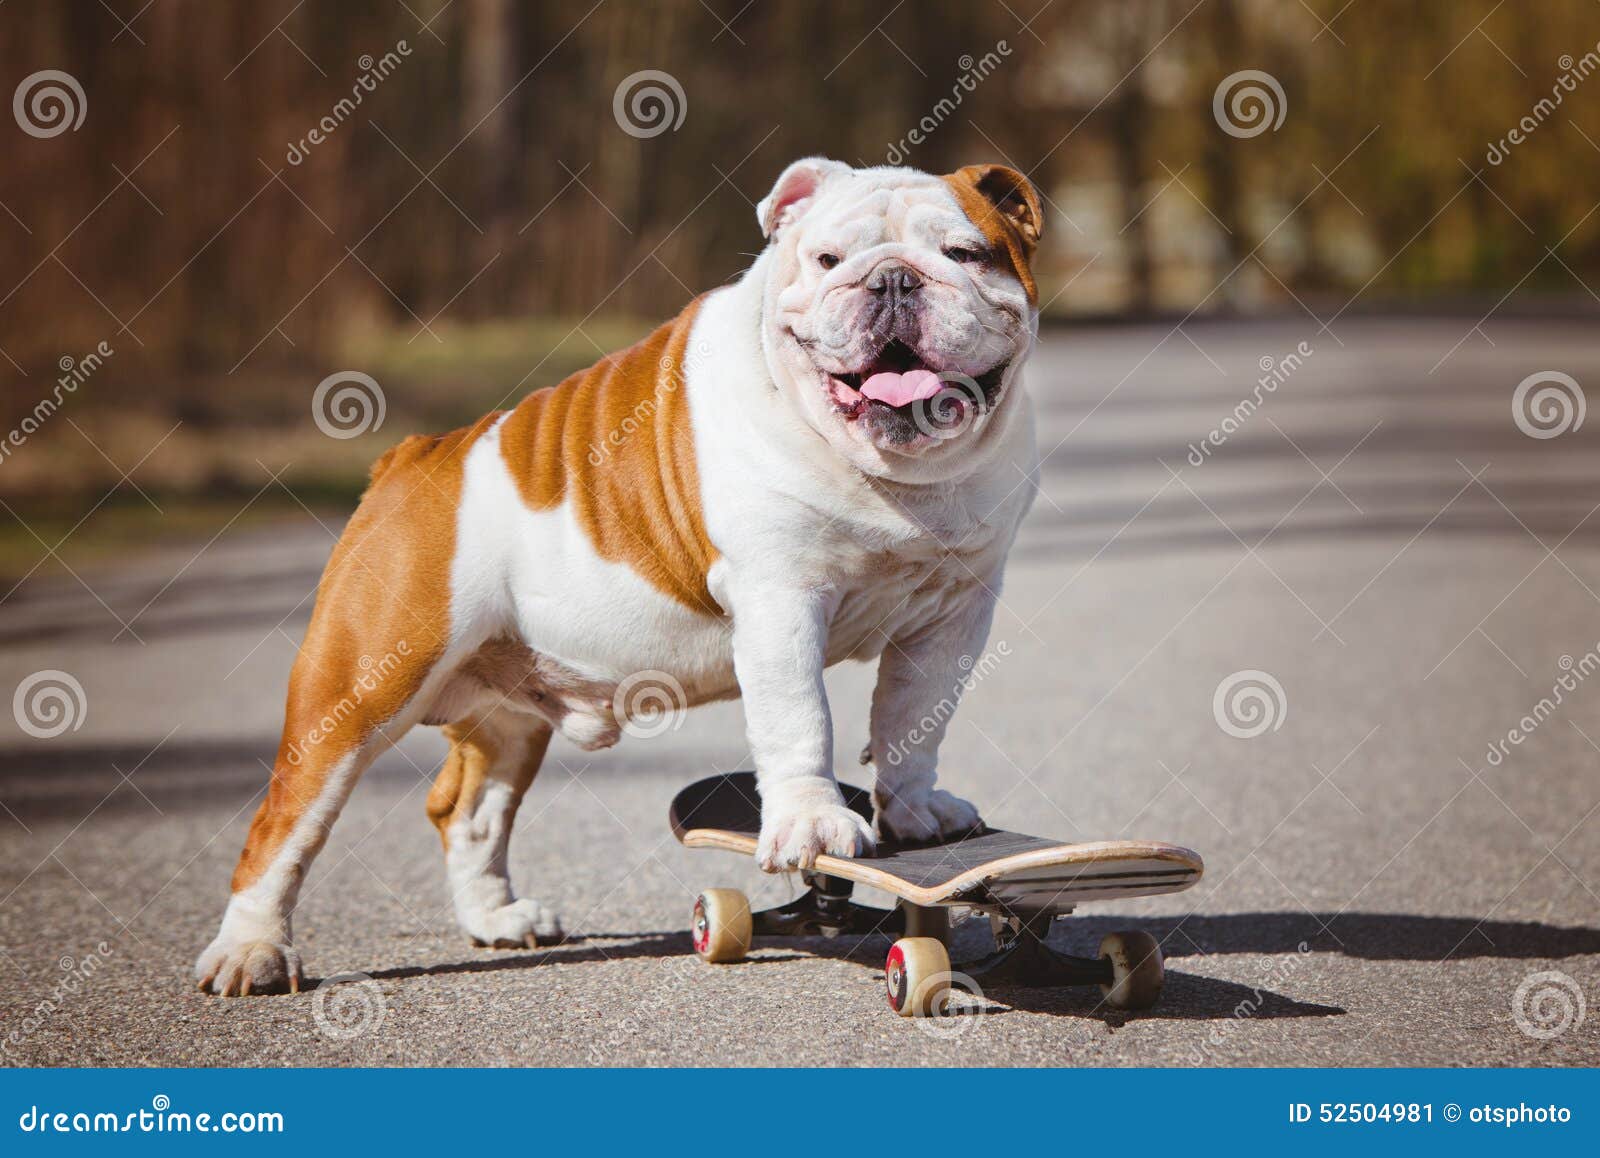 English Bulldog On A Skateboard Stock Image Image of